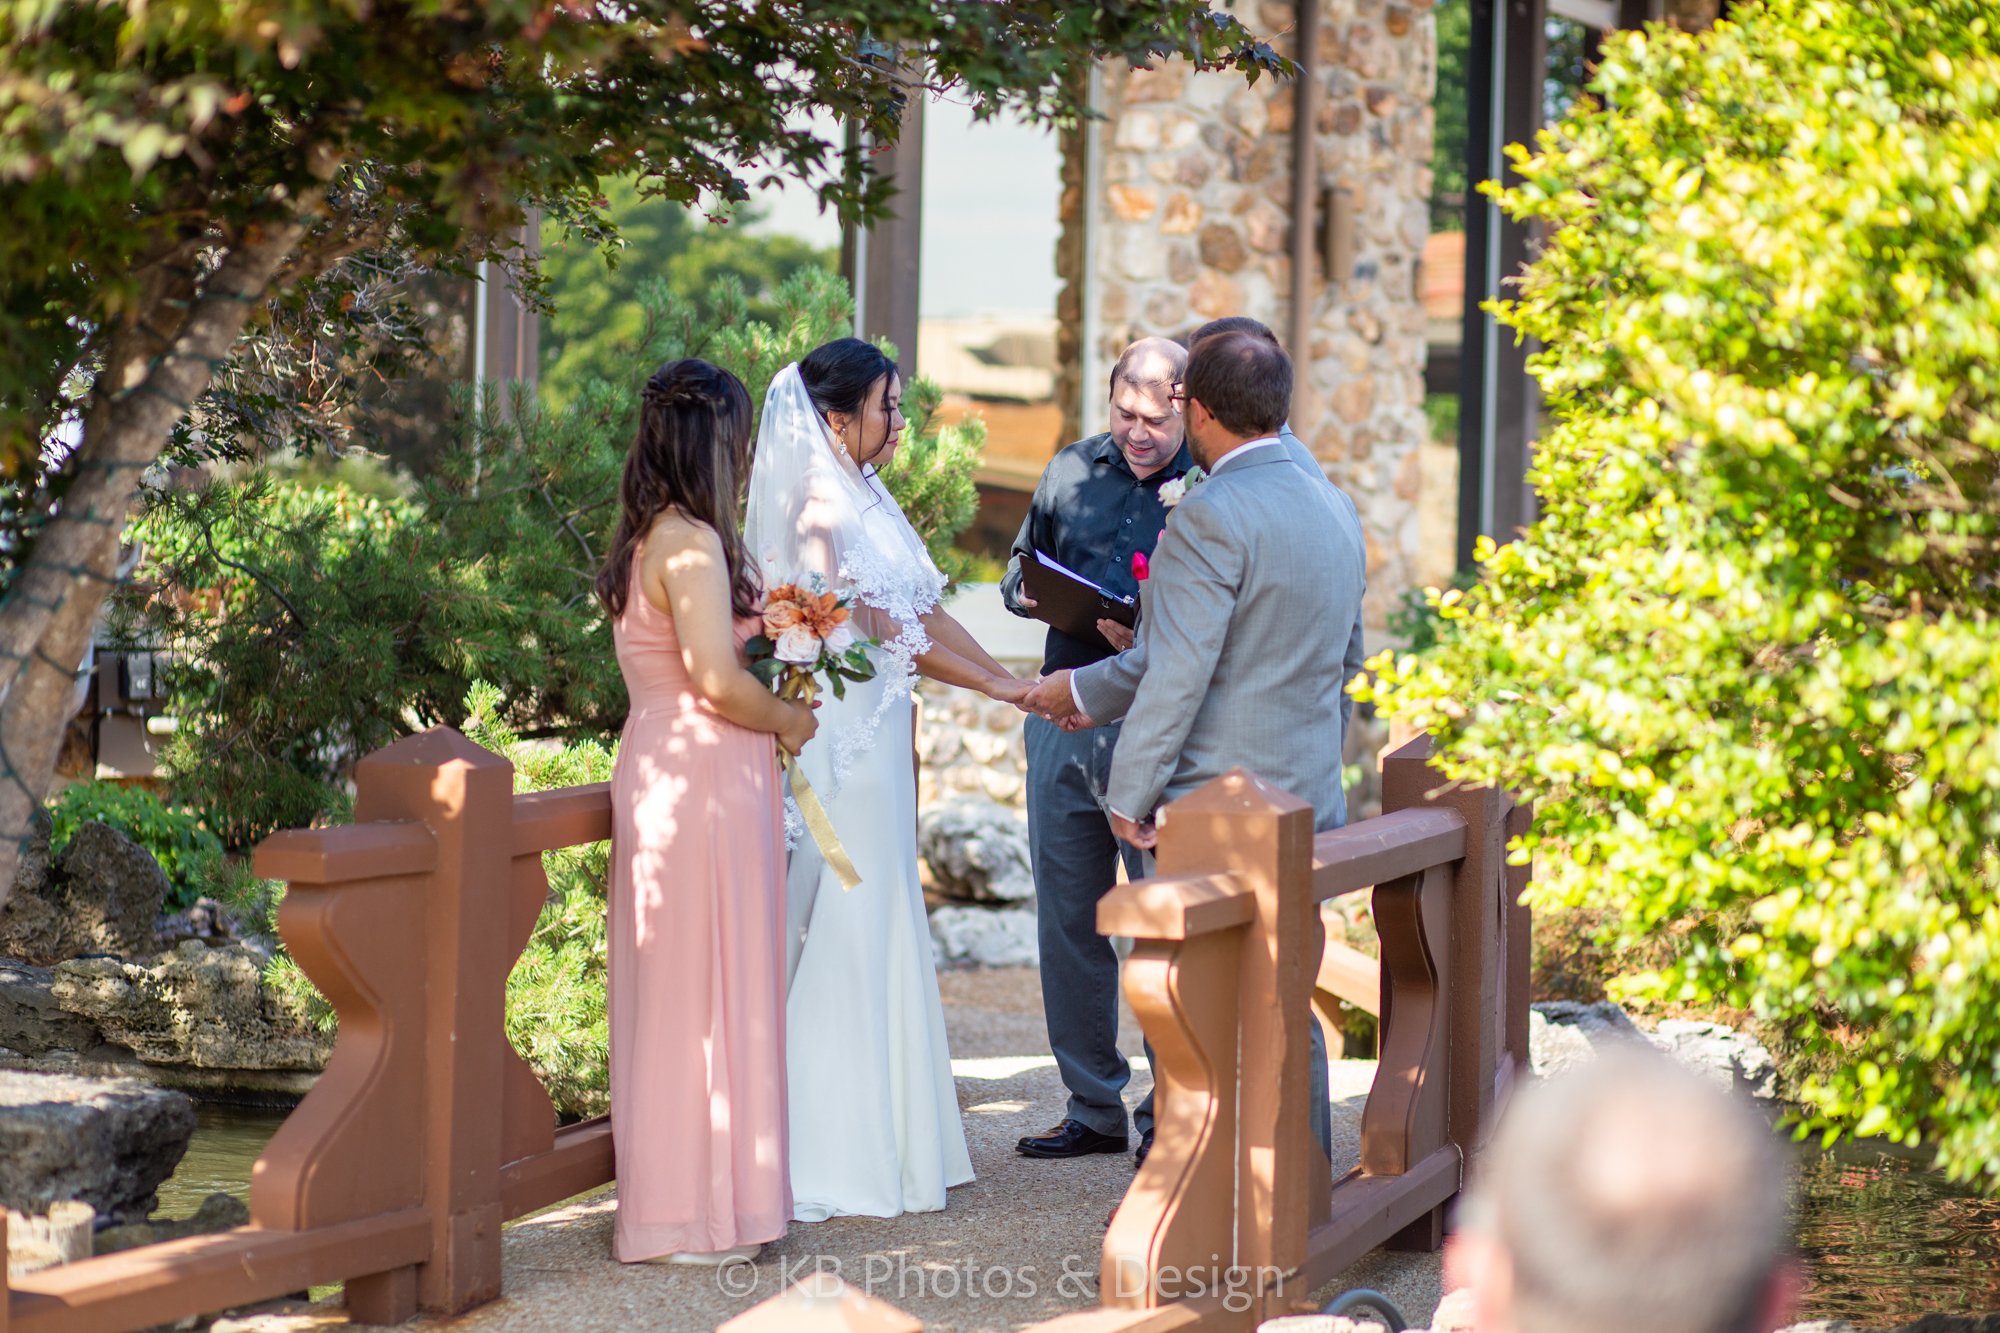 Wedding-Destination-Photography-Lake-of-the-Ozarks-Missouri-Nick_Irene-Jefferson-City-bride-groom-Lodge-of-Four-Seasons-wedding-photographer-KB-Photos-and-Design-336.jpg